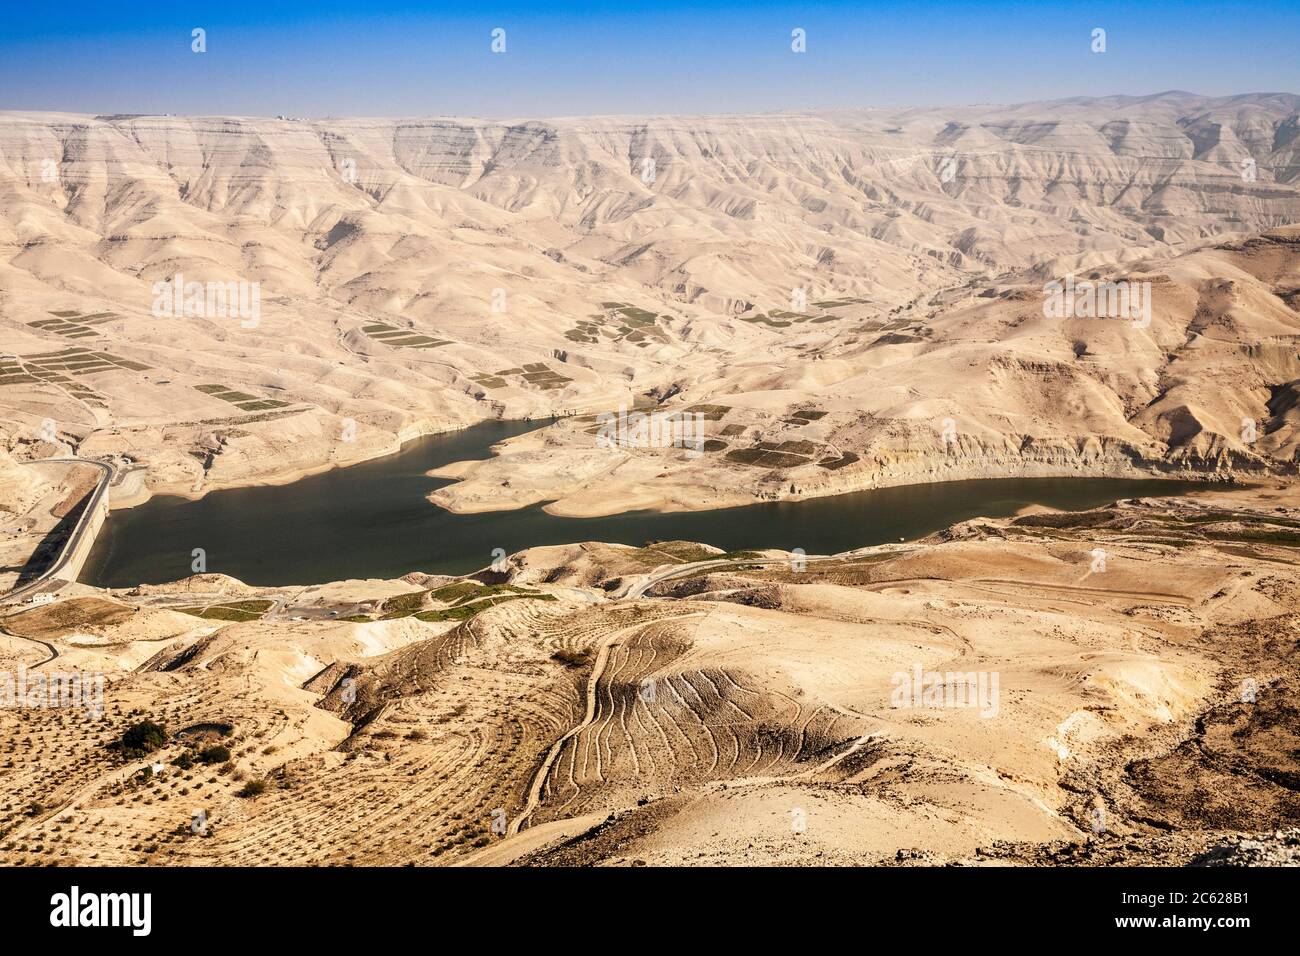 The Mujib Dam and reservoir along the King's Highway in Wadi Mujib between Madaba and Kerak in Jordan. Stock Photo